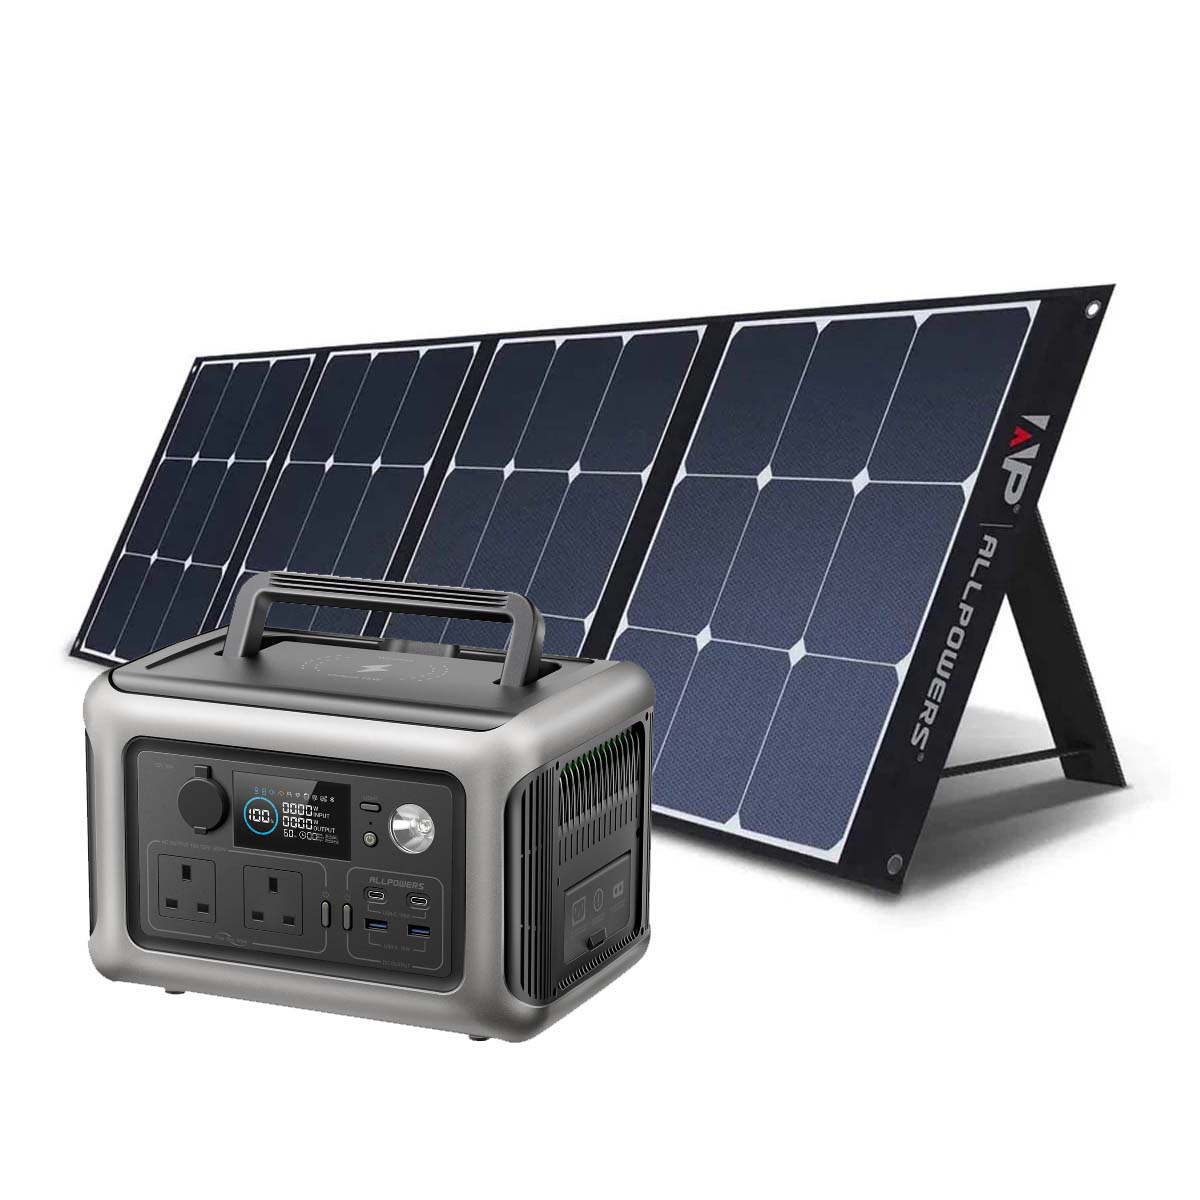 r600-black-1-sp035-solar-generator-kit-uk.jpg